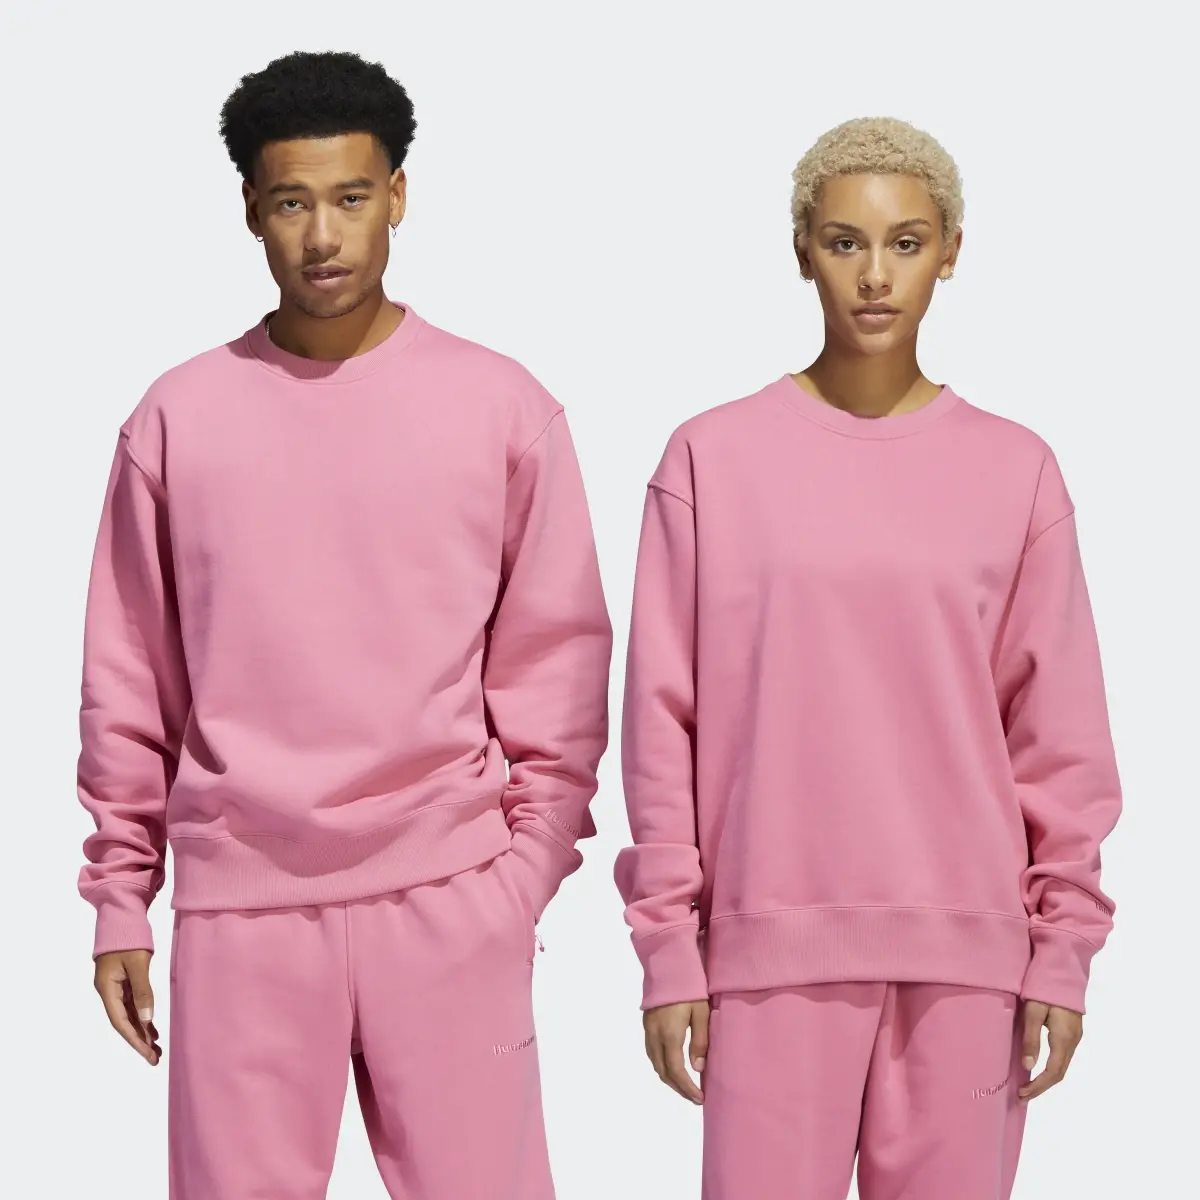 Adidas Pharrell Williams Basics Crew Sweatshirt (Gender Neutral). 1